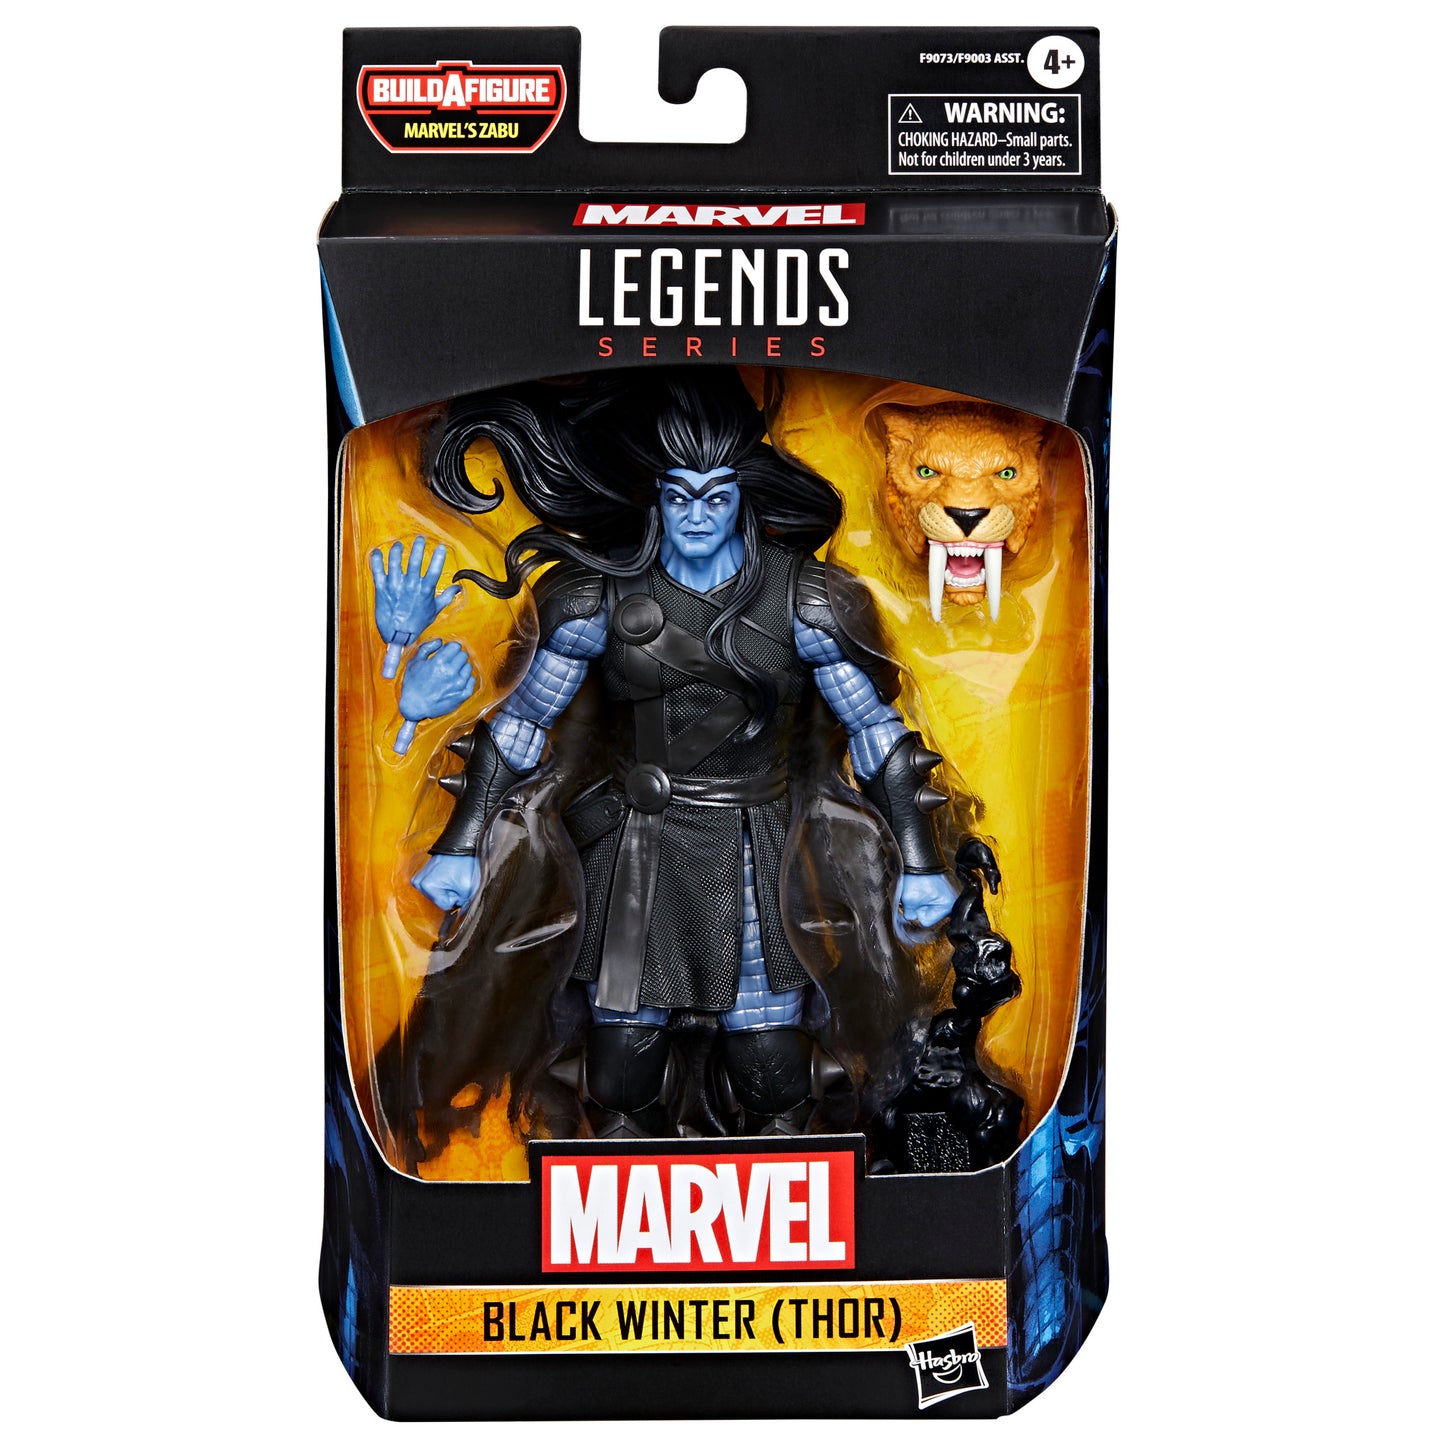 Marvel legends series comics black winter thor action figure